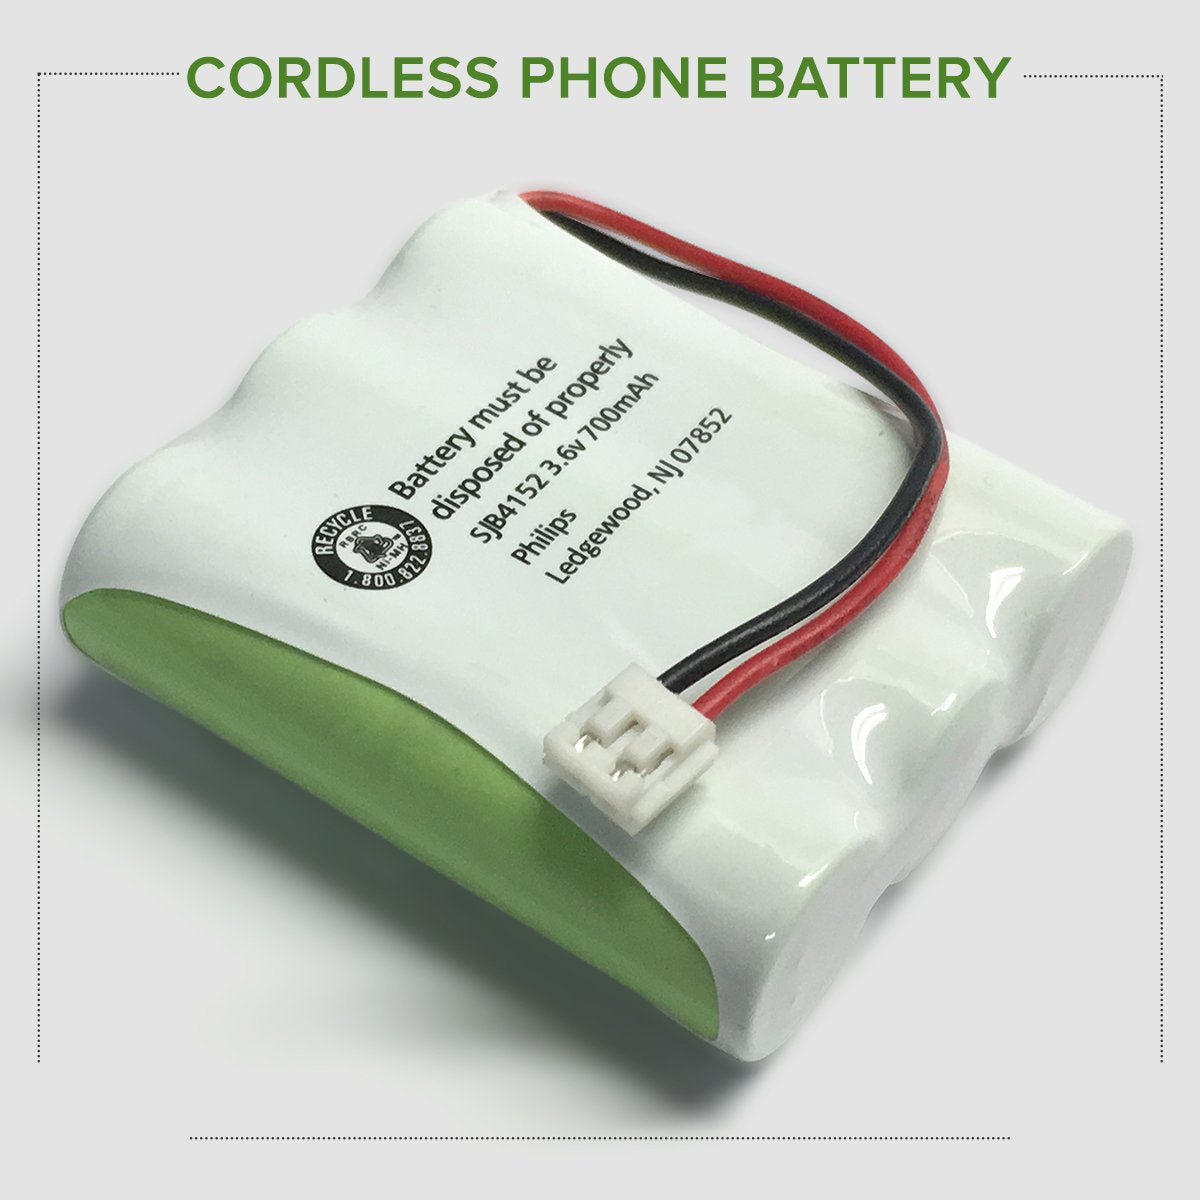 AT&T  E5252 Cordless Phone Battery